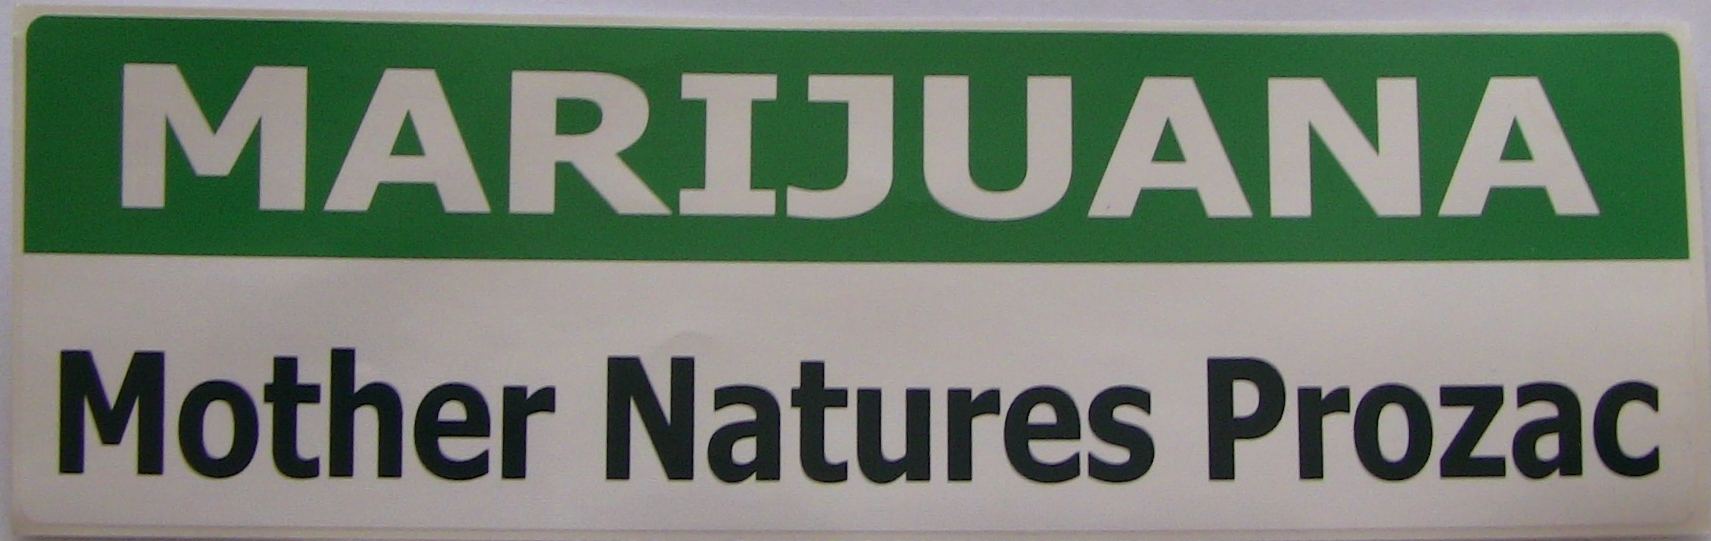 Marijuana, Mother Natures Prozac - Sticker, Green/White